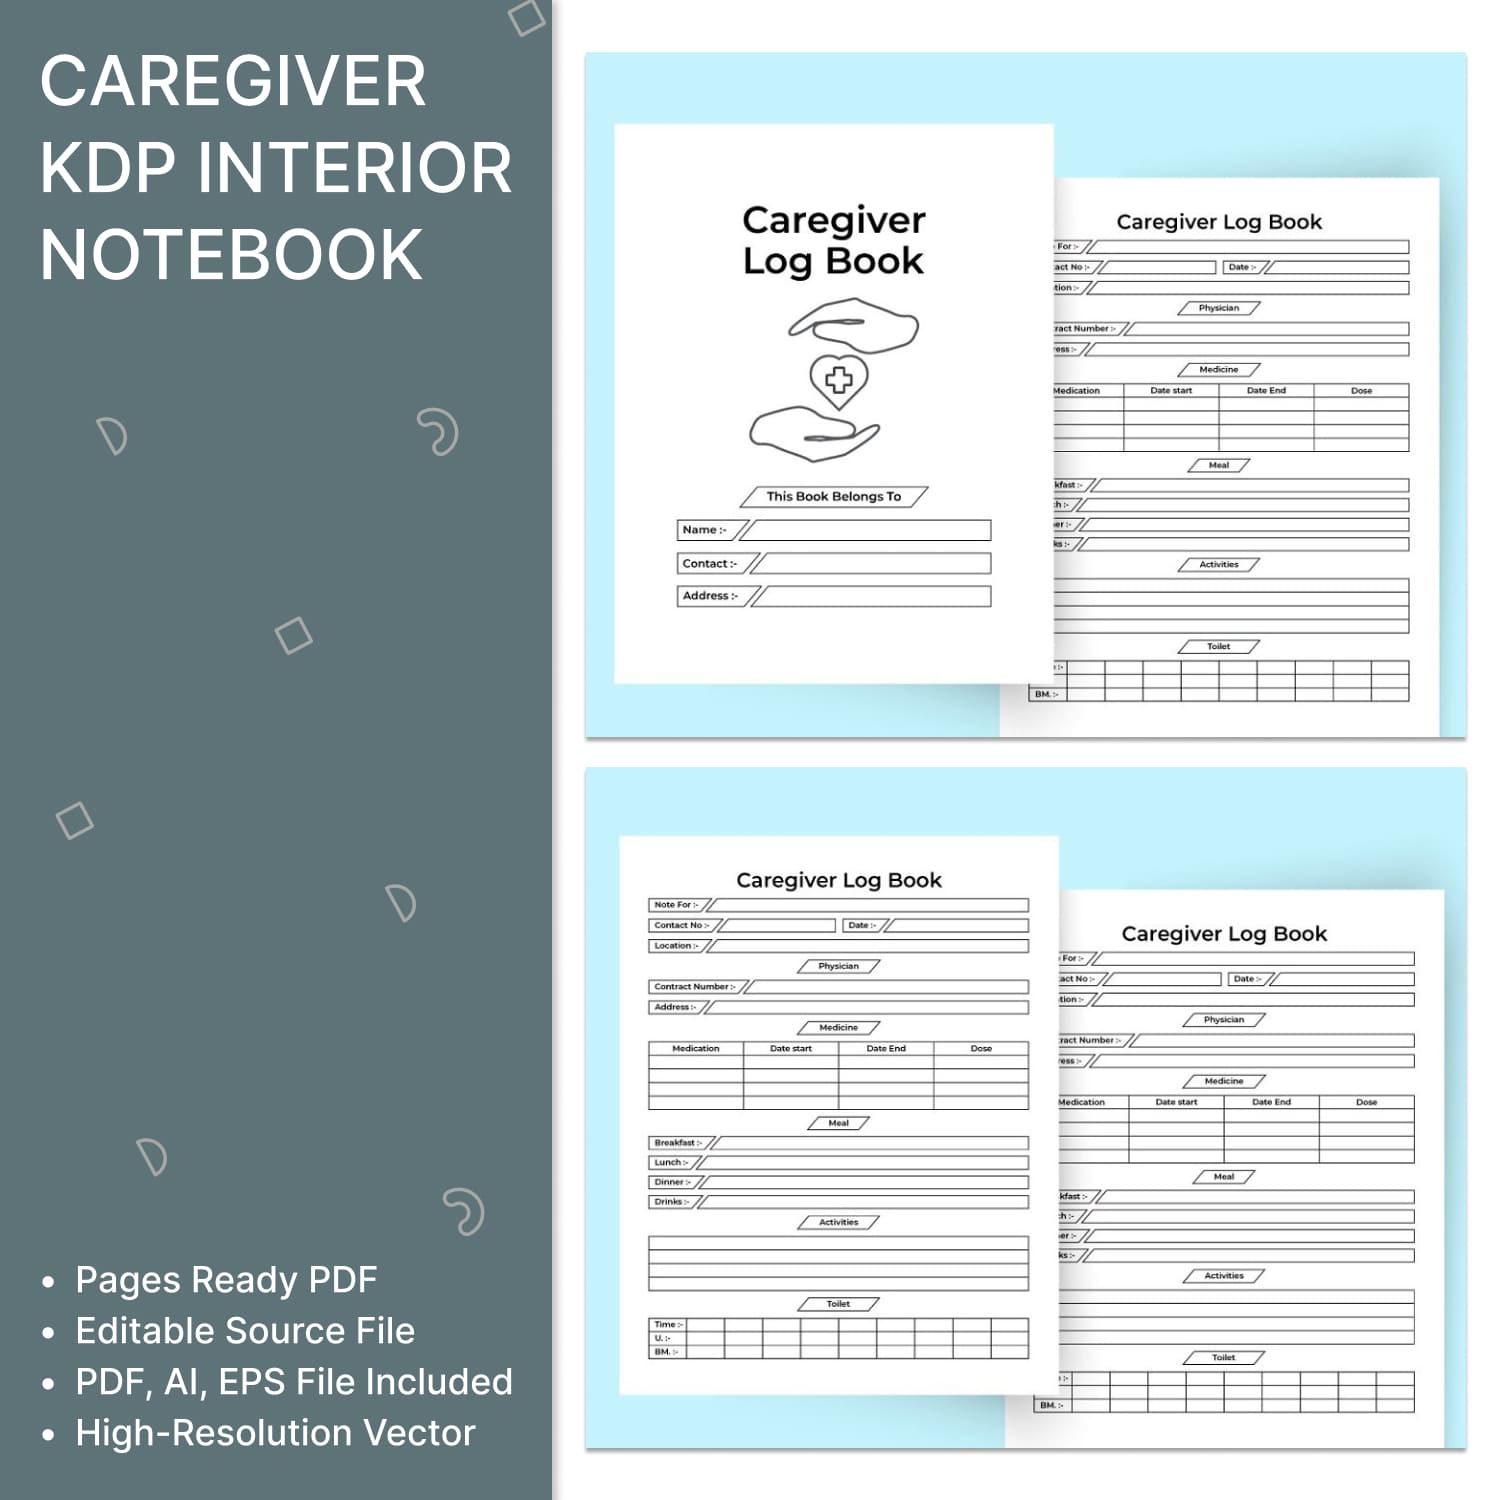 Caregiver KDP interior notebook - main image preview.